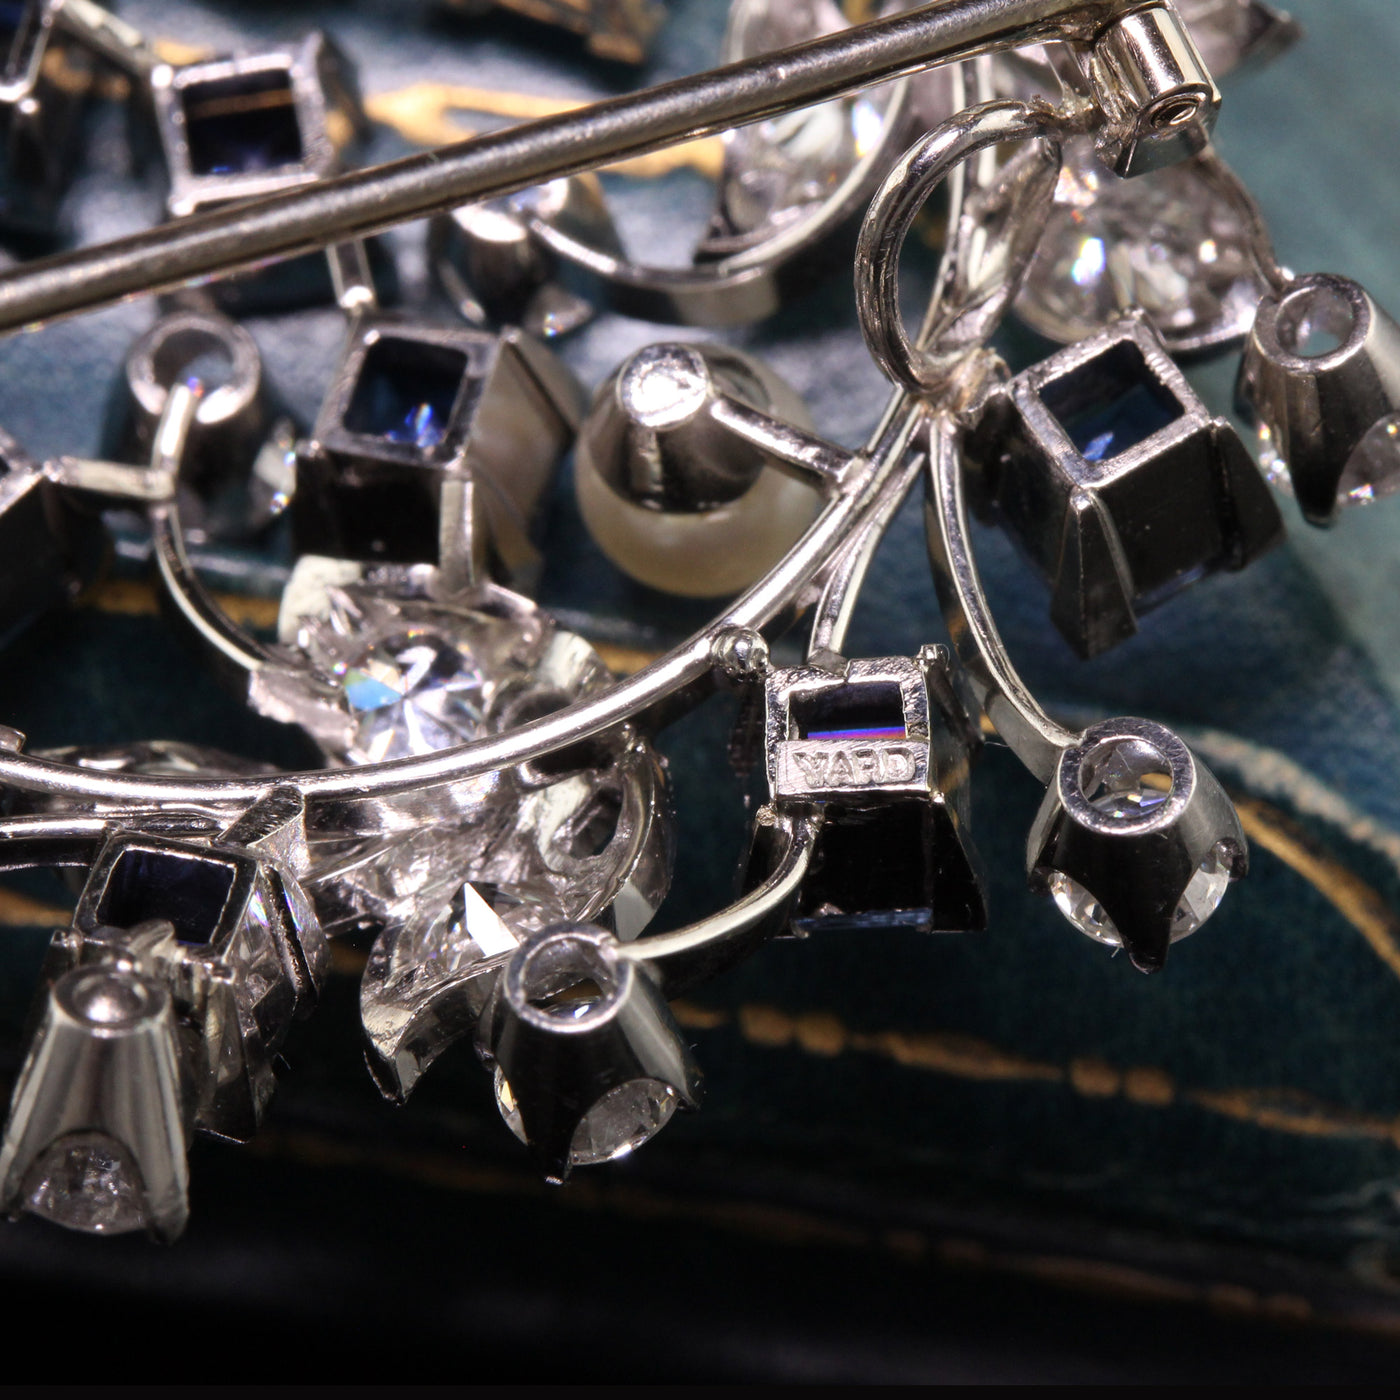 Antique Art Deco Raymond Yard Platinum Old Cut Diamond Yogo Sapphire Pin Pendant - GIA